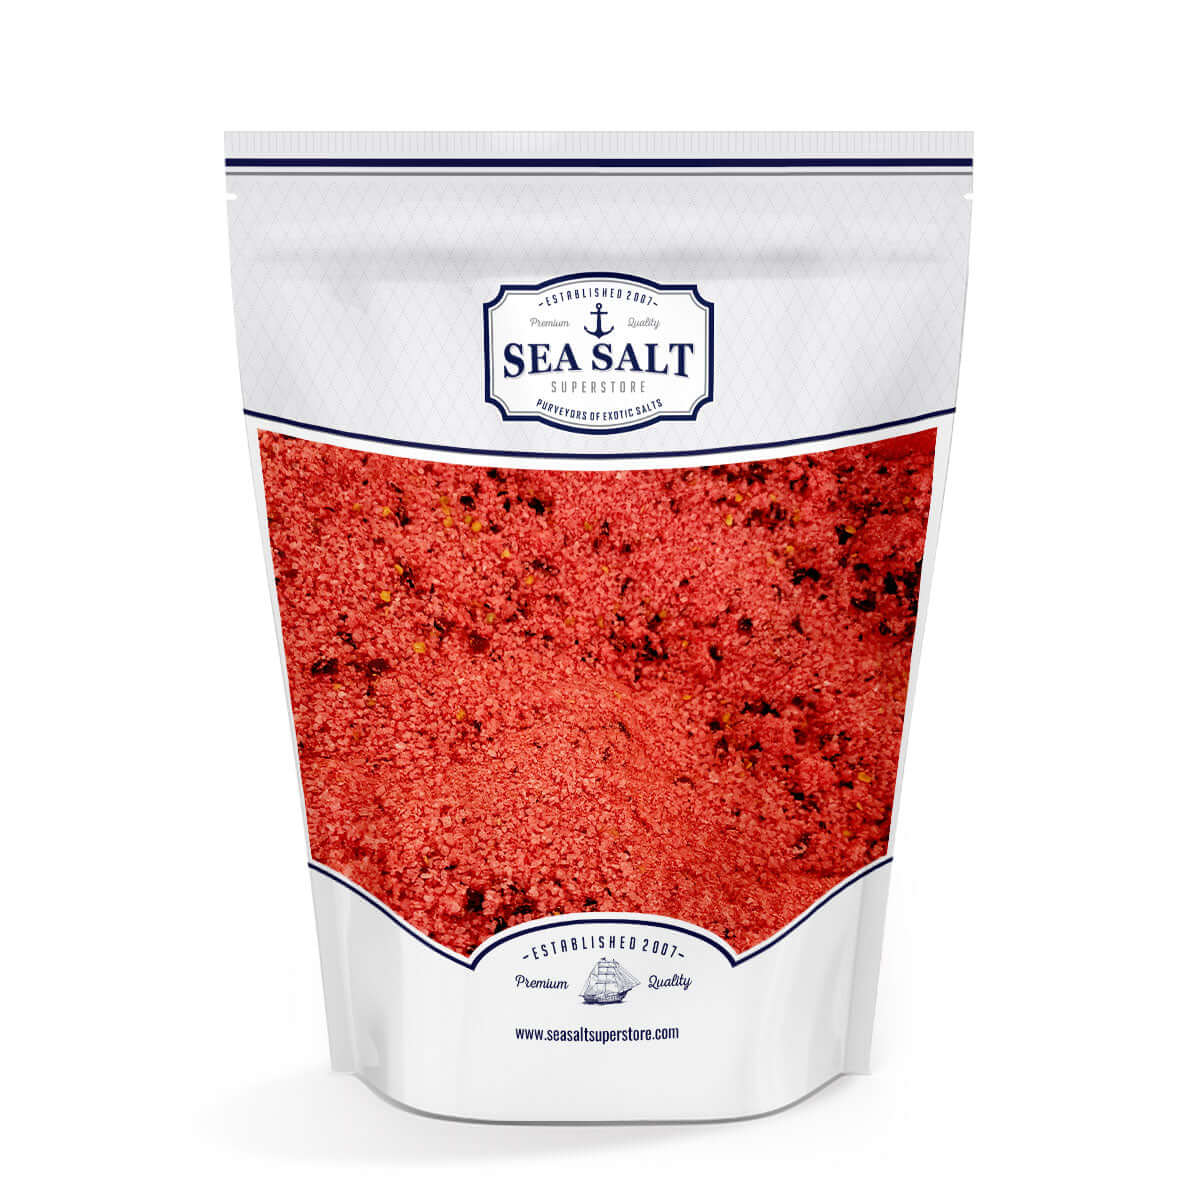 Raspberry Chipotle Sea Salt by Sea Salt Superstore - 40 lbs Finishing Salts